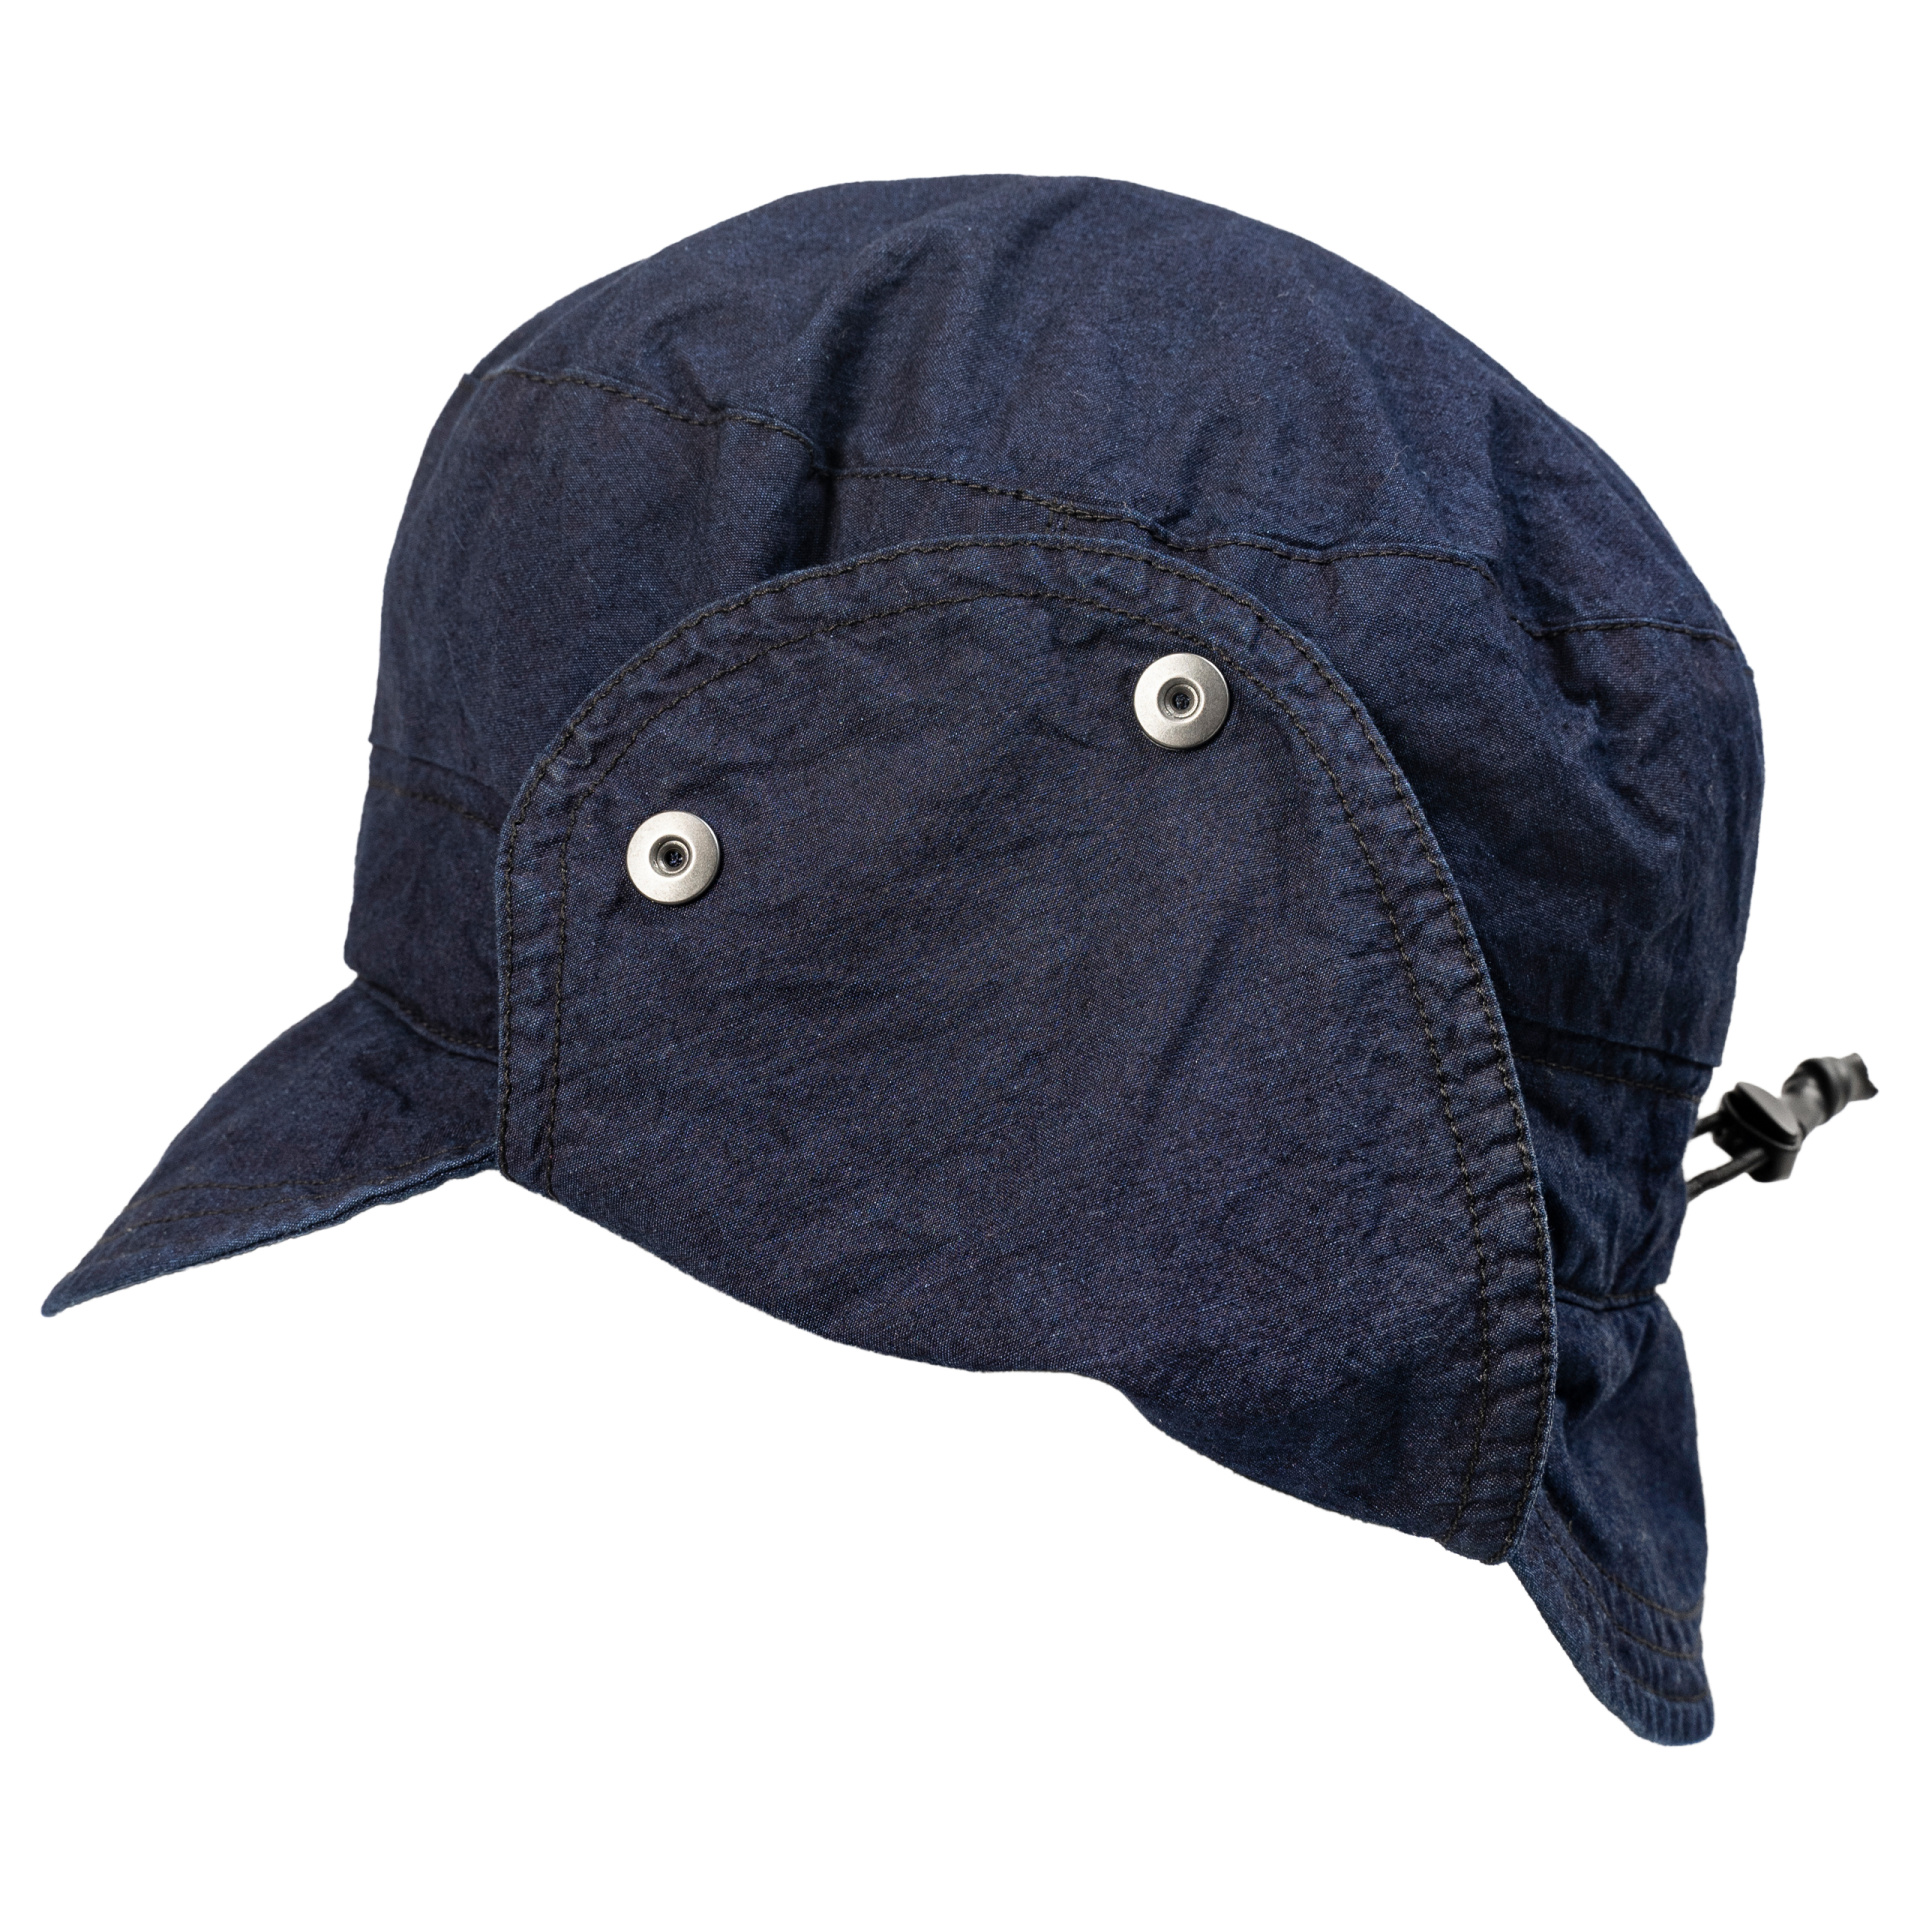 The Viridi-Anne Cotton mask cap